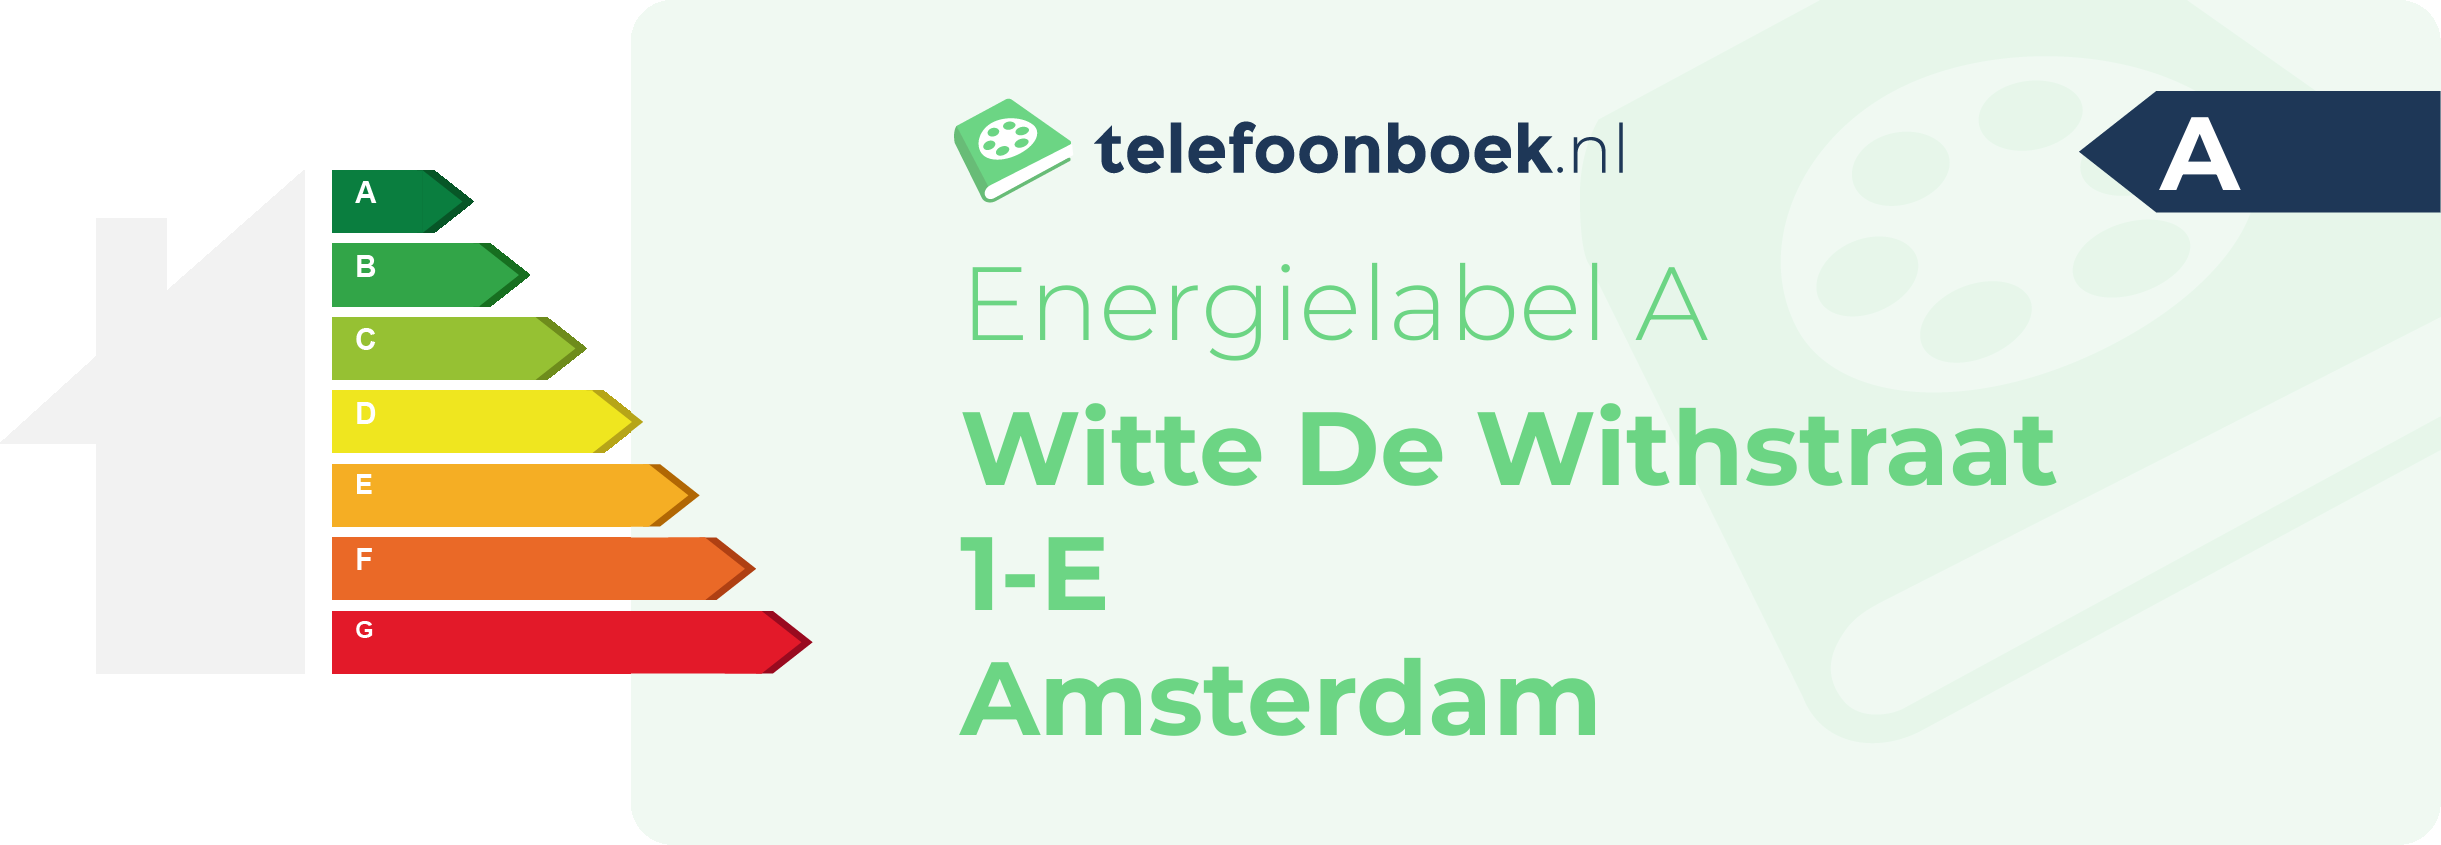 Energielabel Witte De Withstraat 1-E Amsterdam